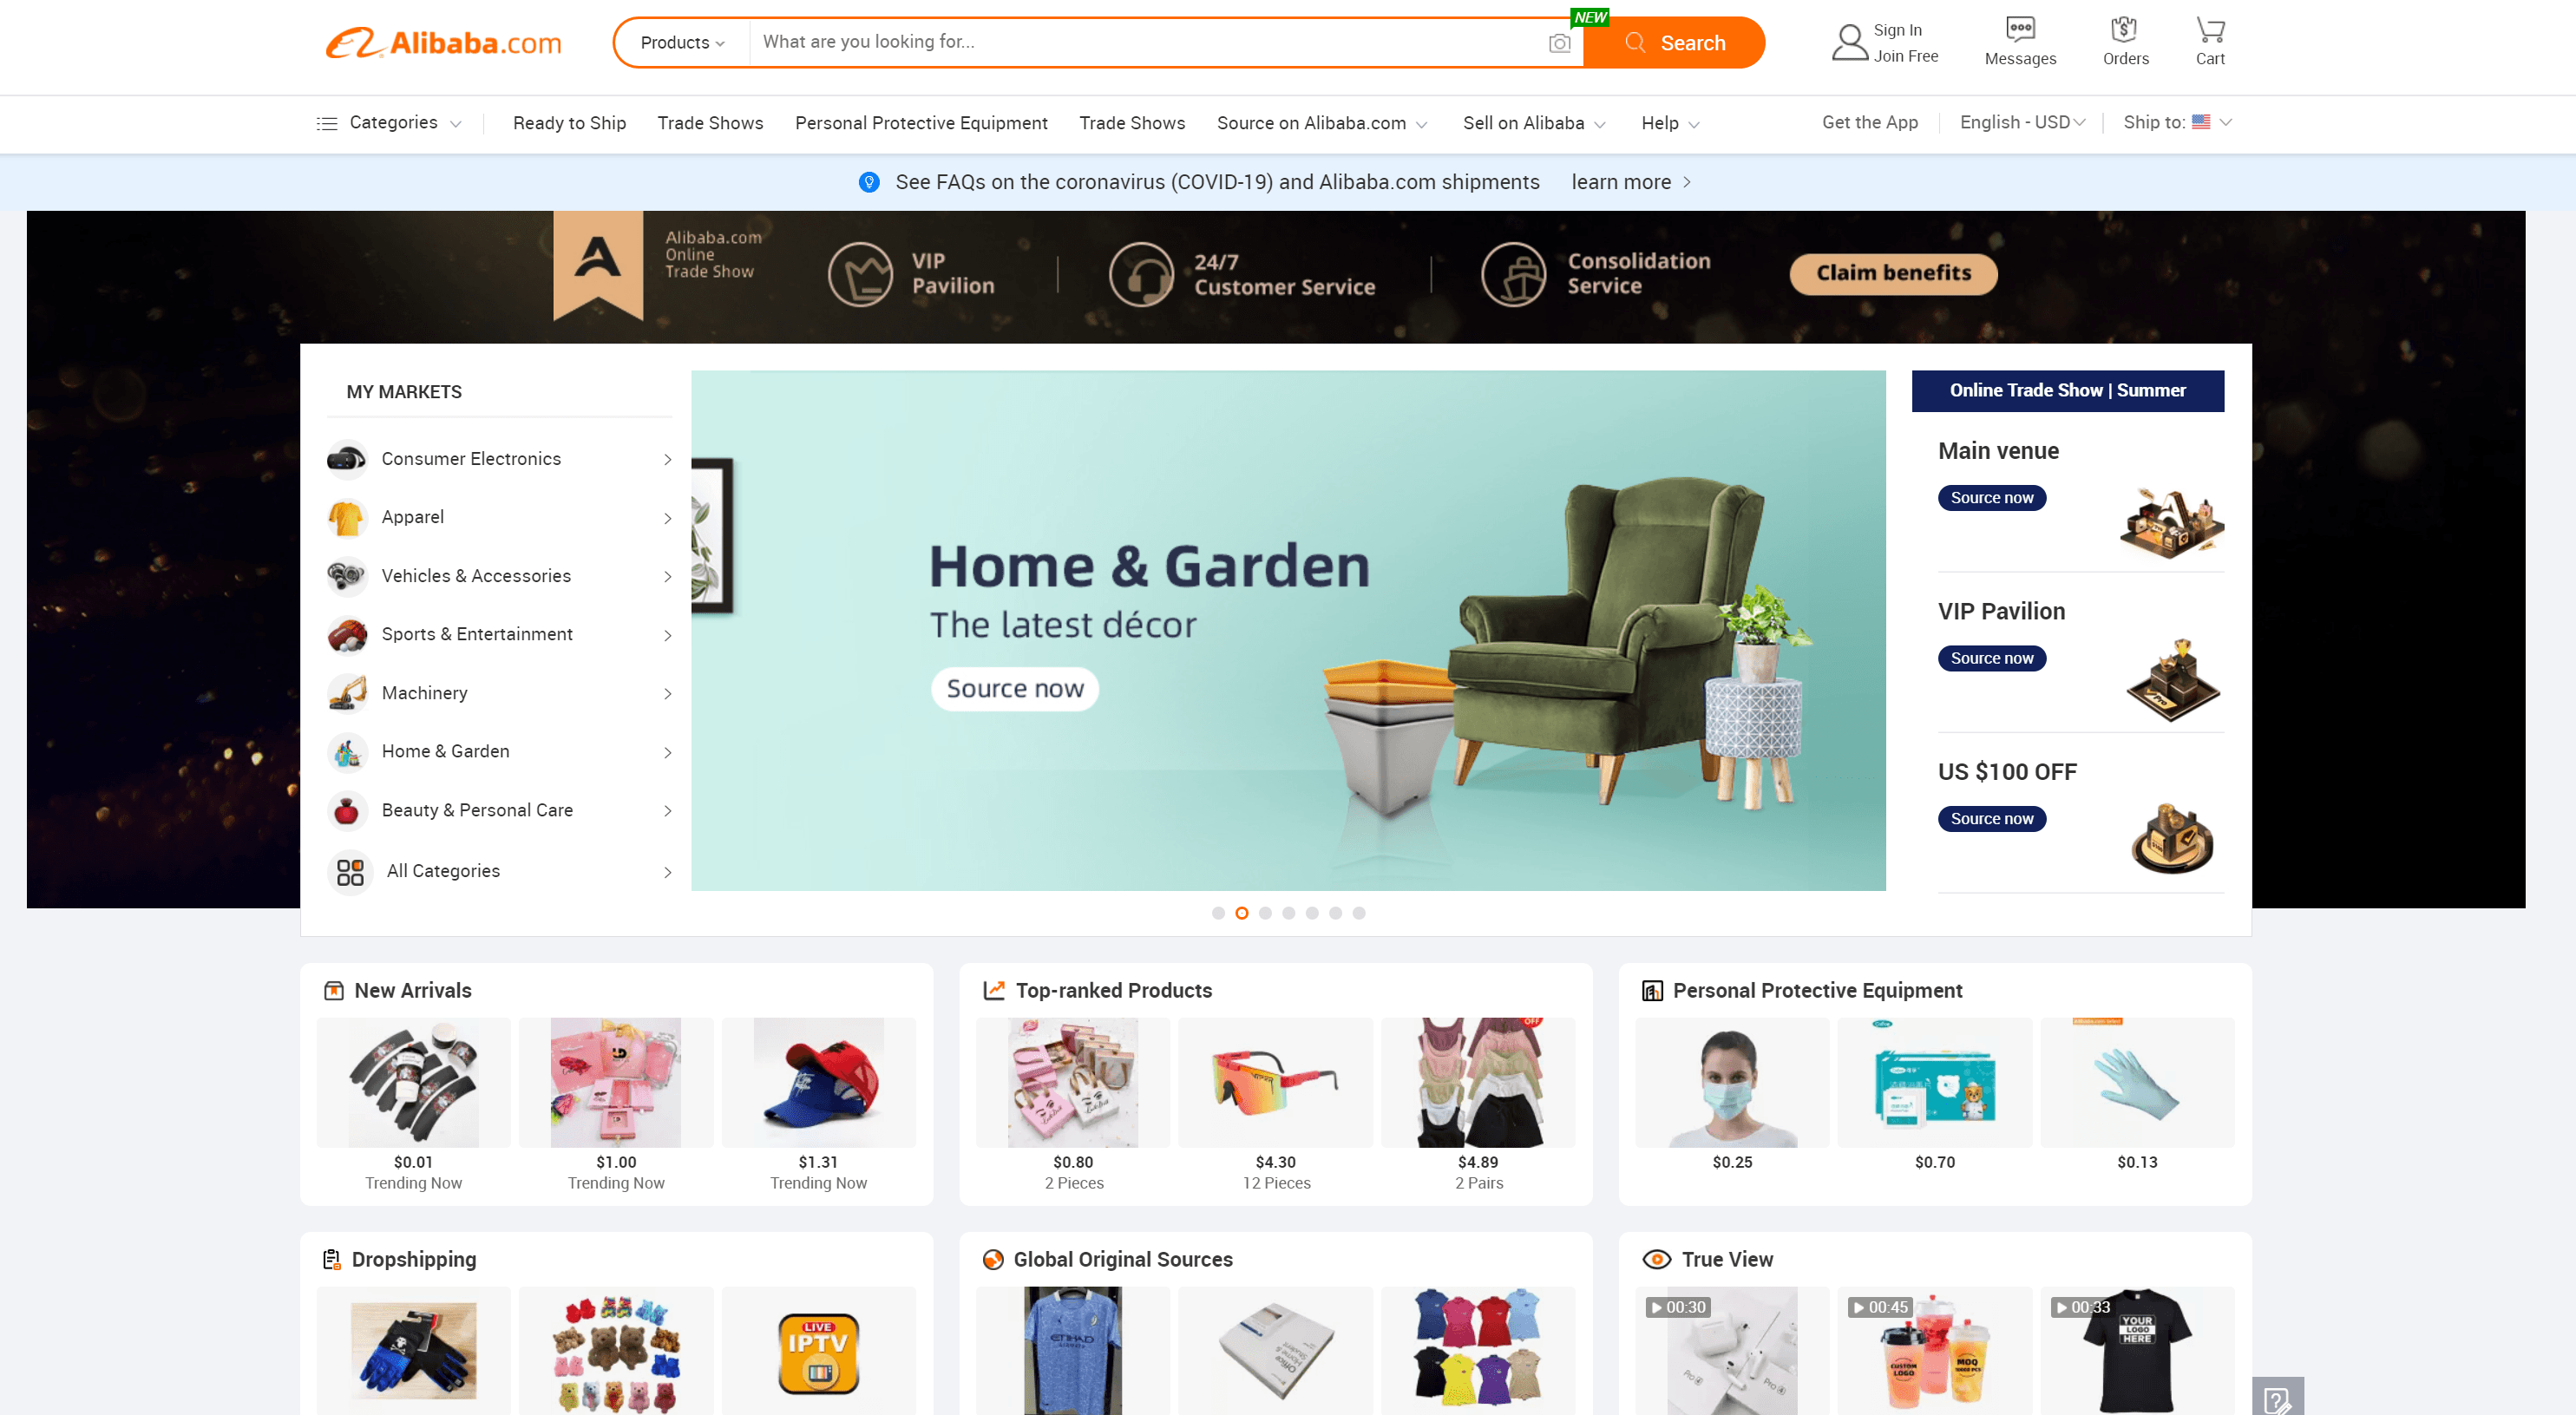 The Alibaba.com homepage